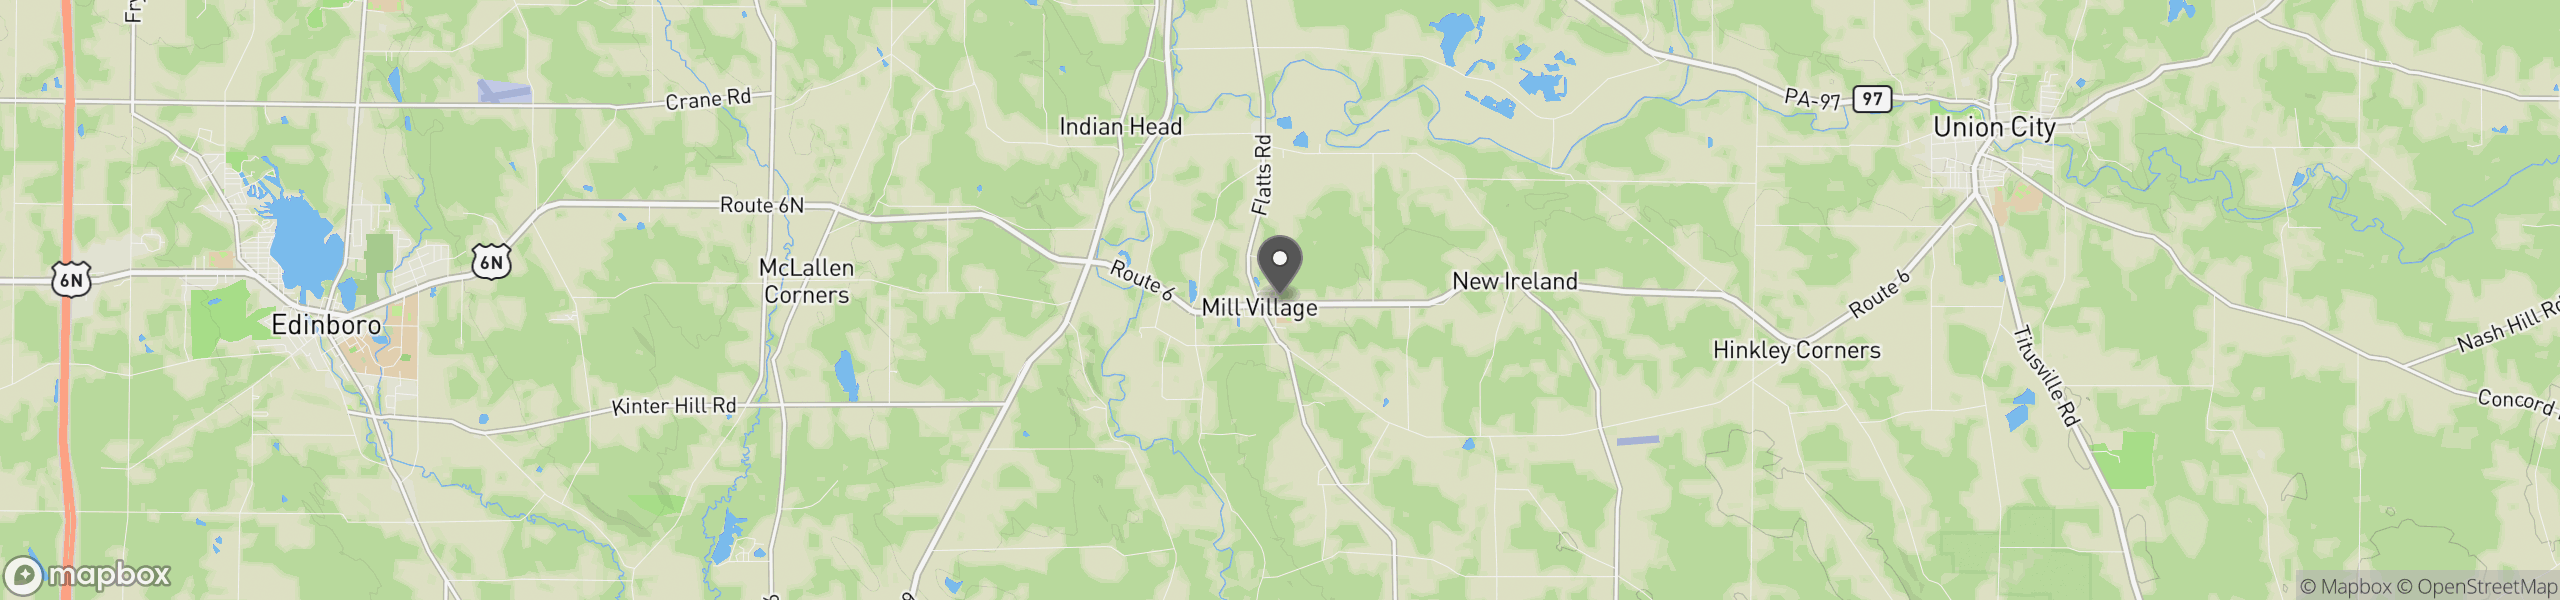 Mill Village, PA